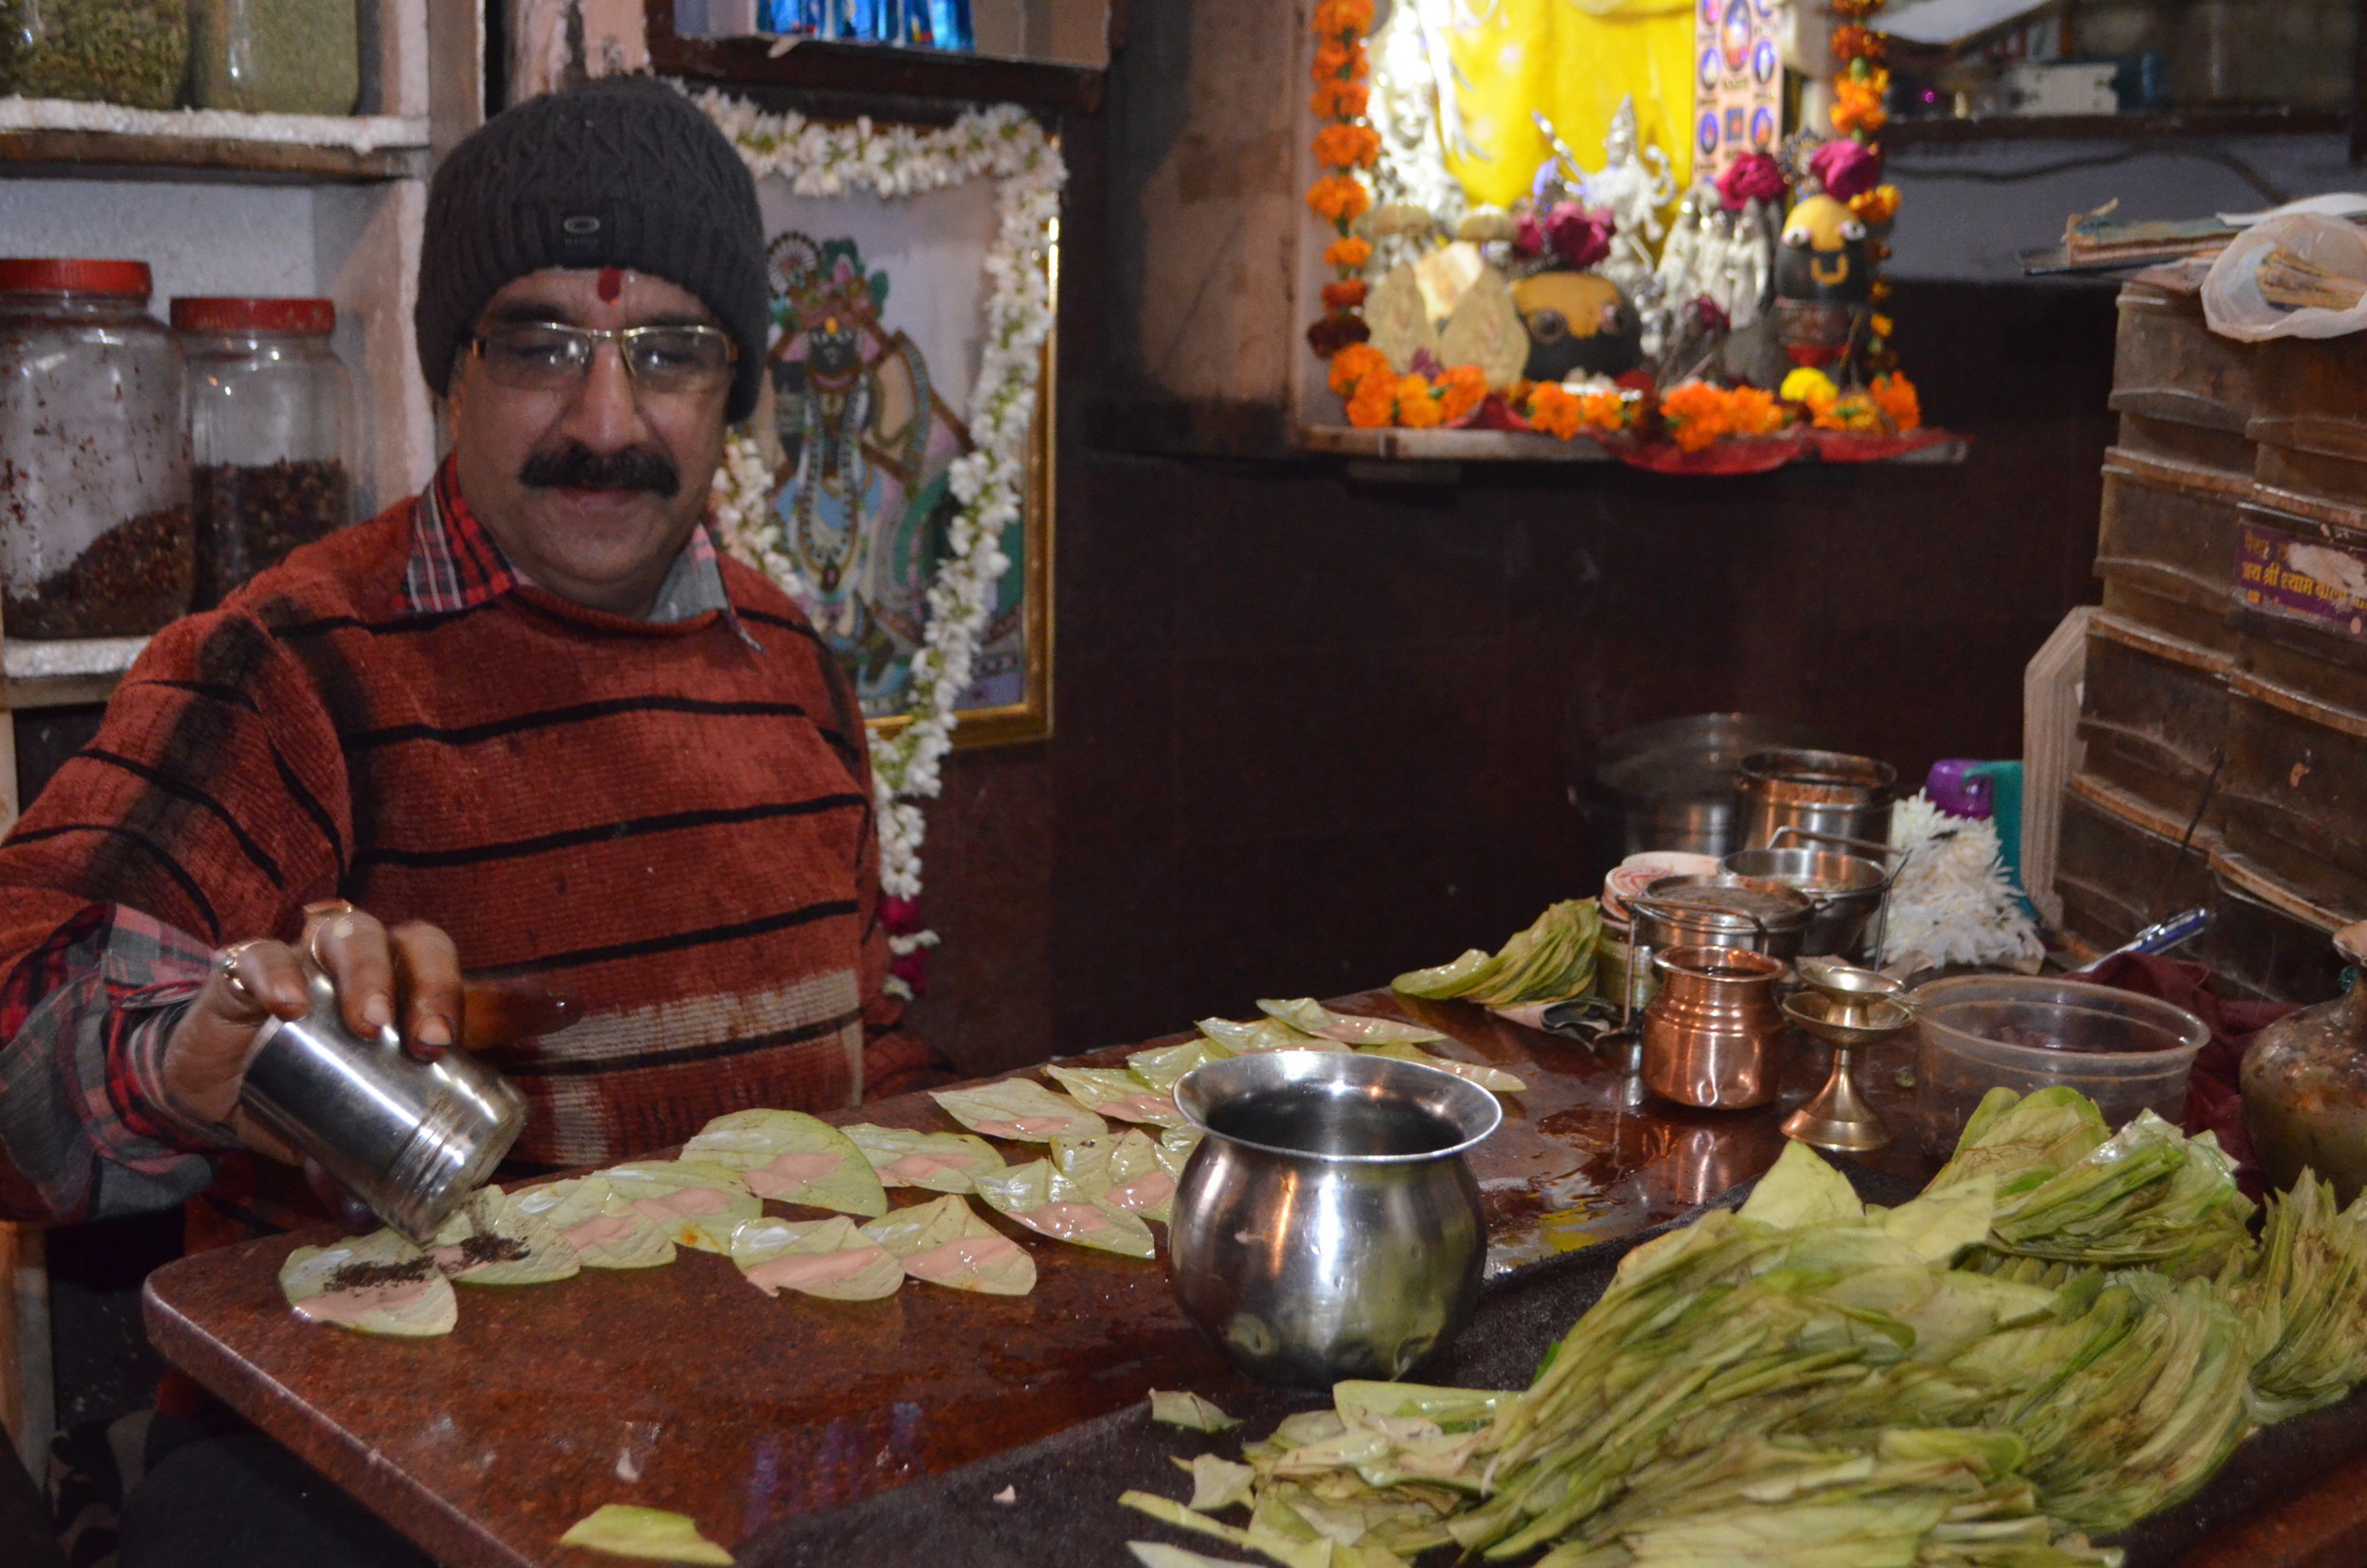 Old Delhi Market Panwalla Beacon Holidays India tours